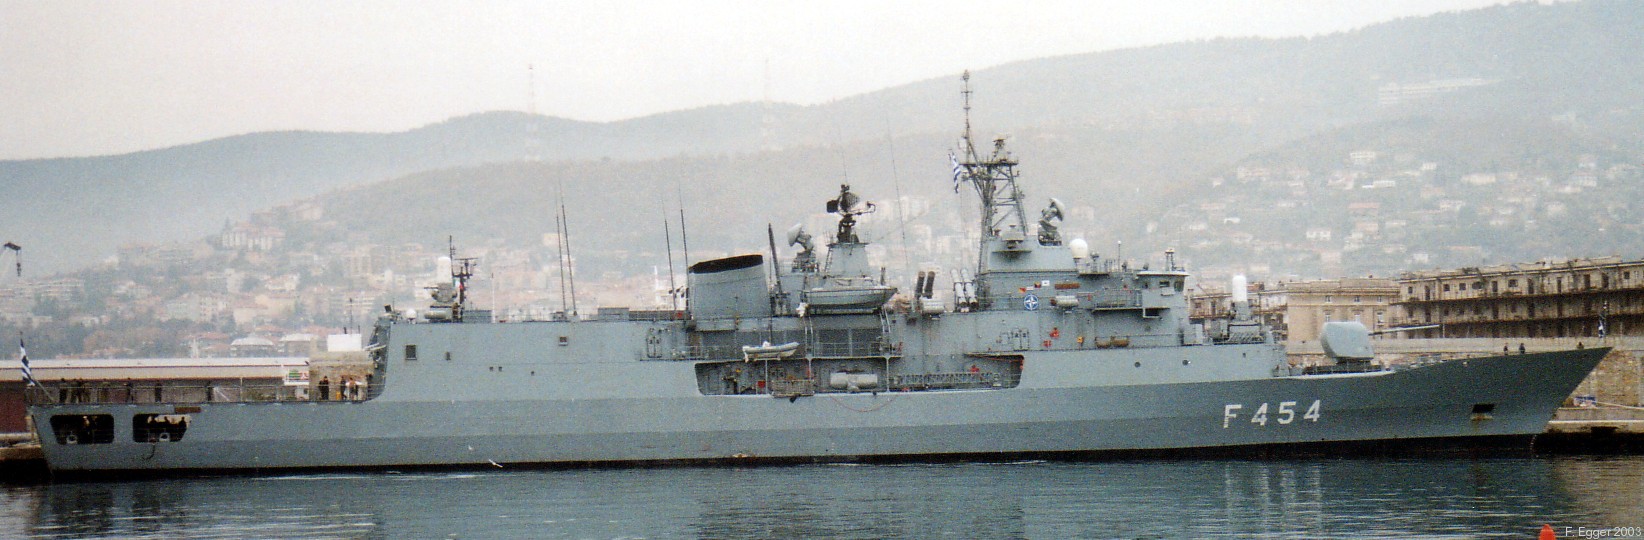 f 454 hs psara hydra class frigate meko-200hn hellenic navy greece nato standing naval force mediterranean stanavformed trieste italy 2003 02